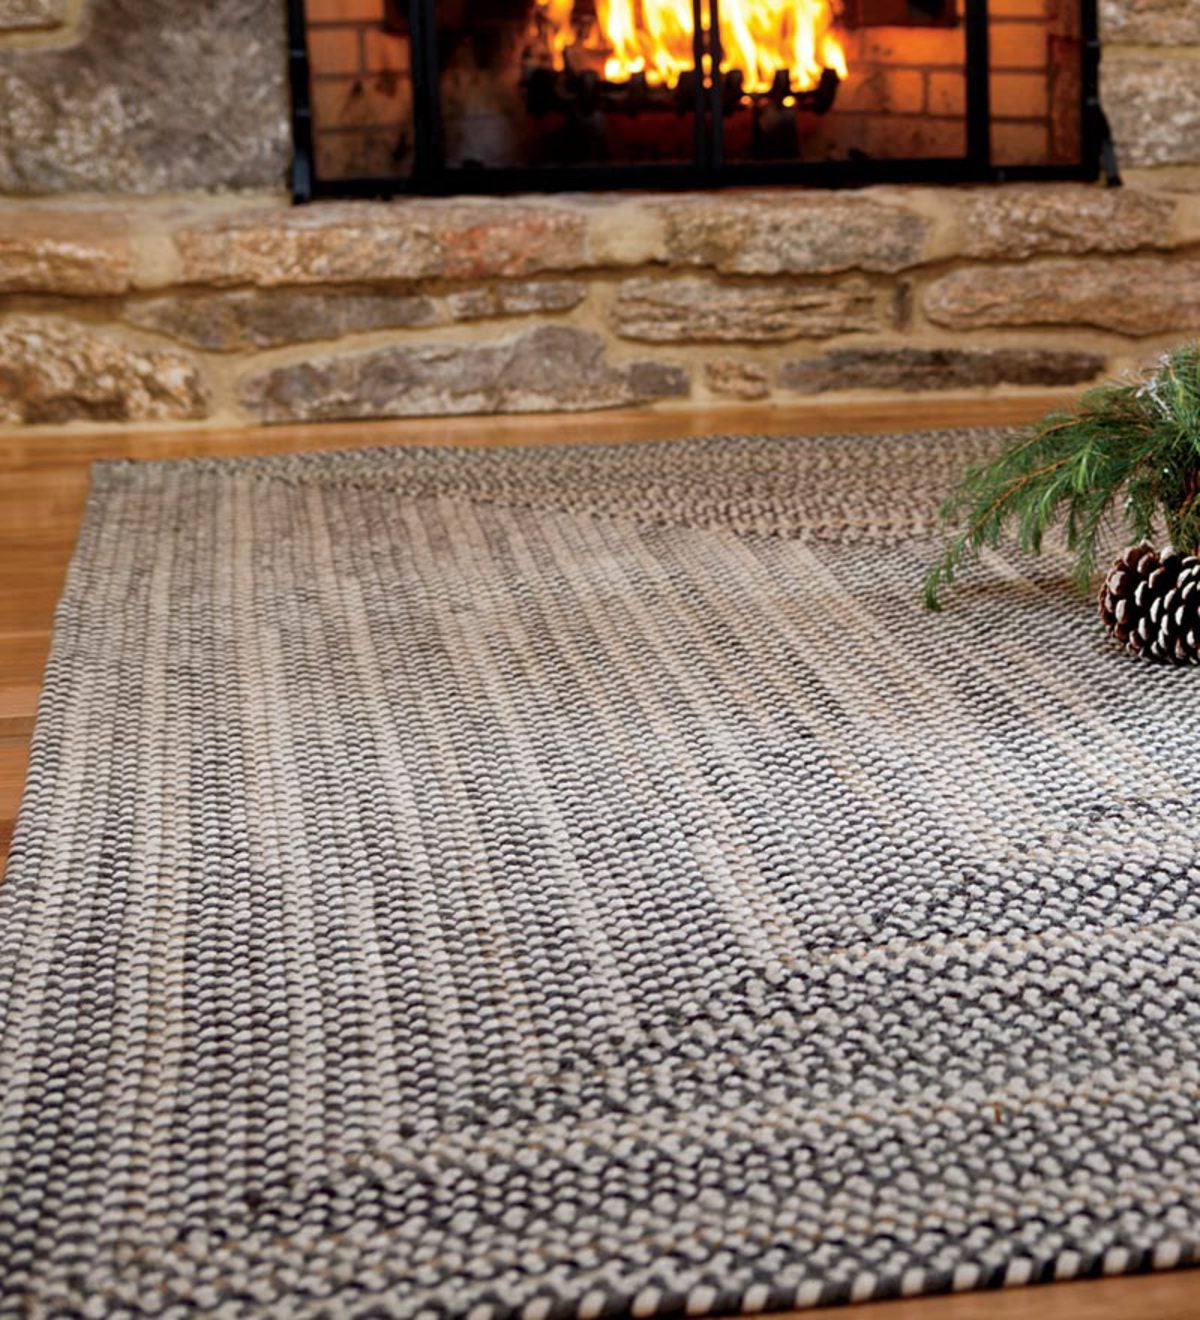 Bear Creek Rectangular Braided Wool Blend Rug, 4' x 6' - Gray Multi